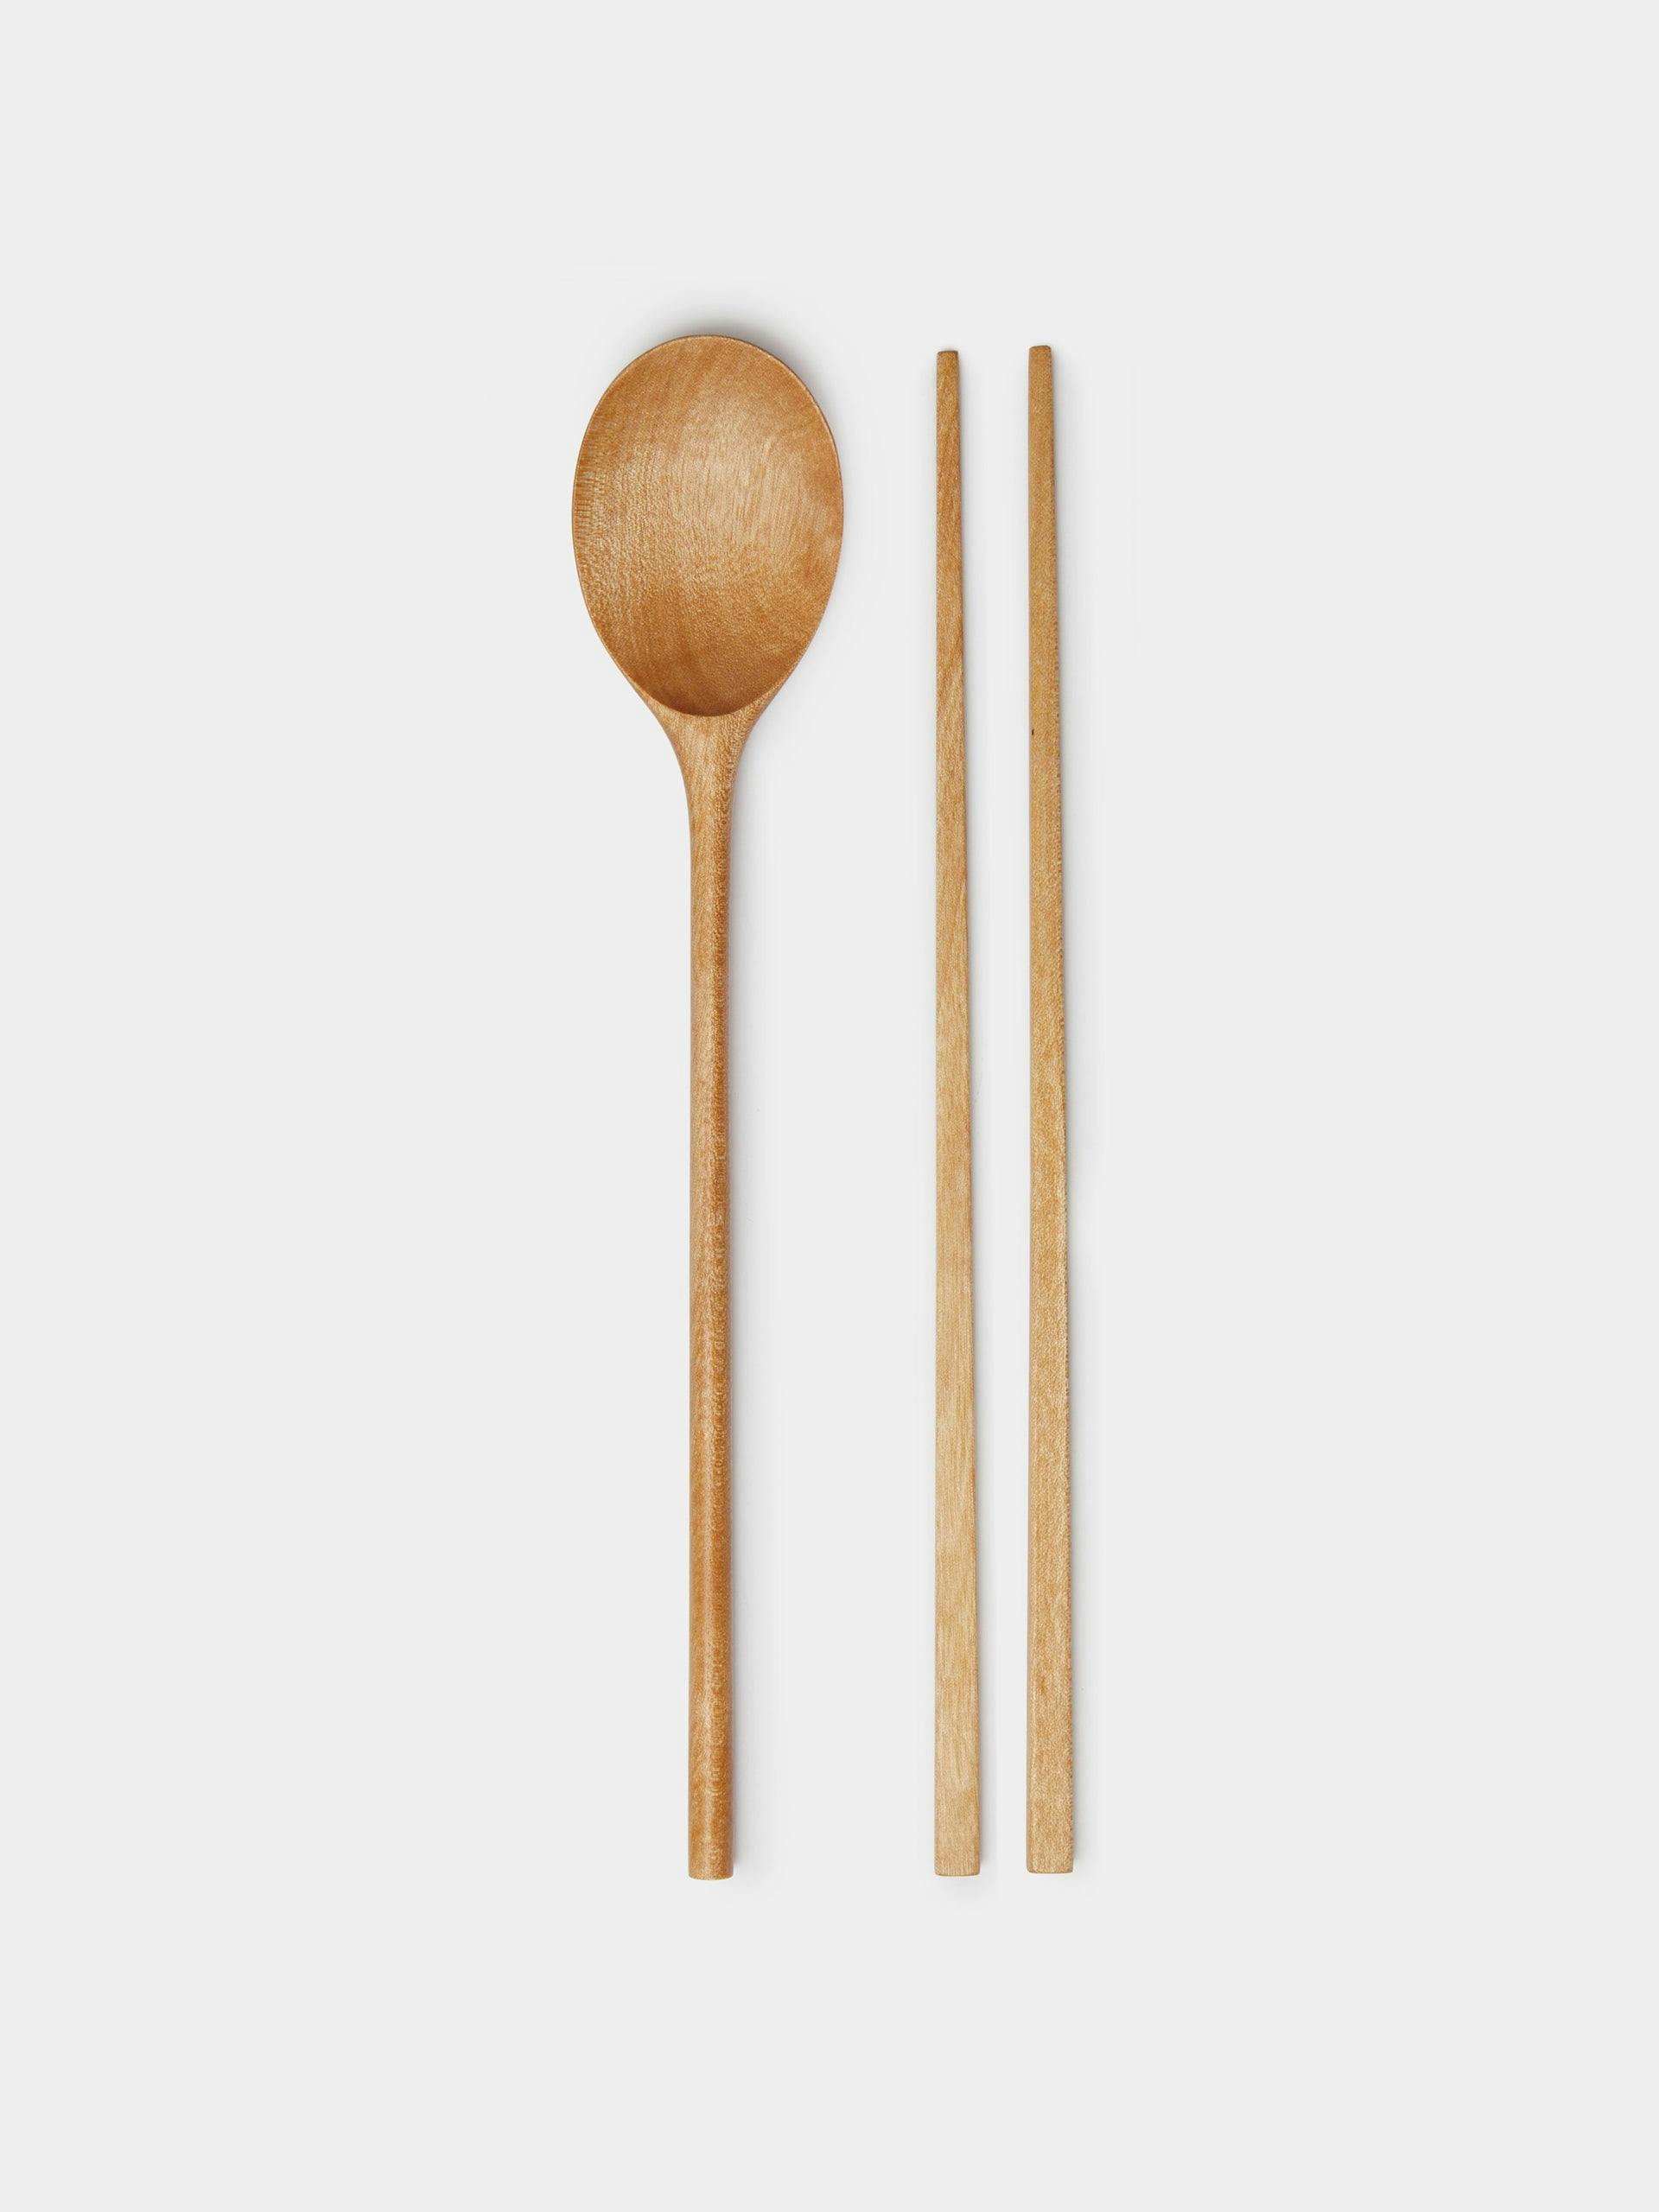 Birch lunch spoon and chopsticks